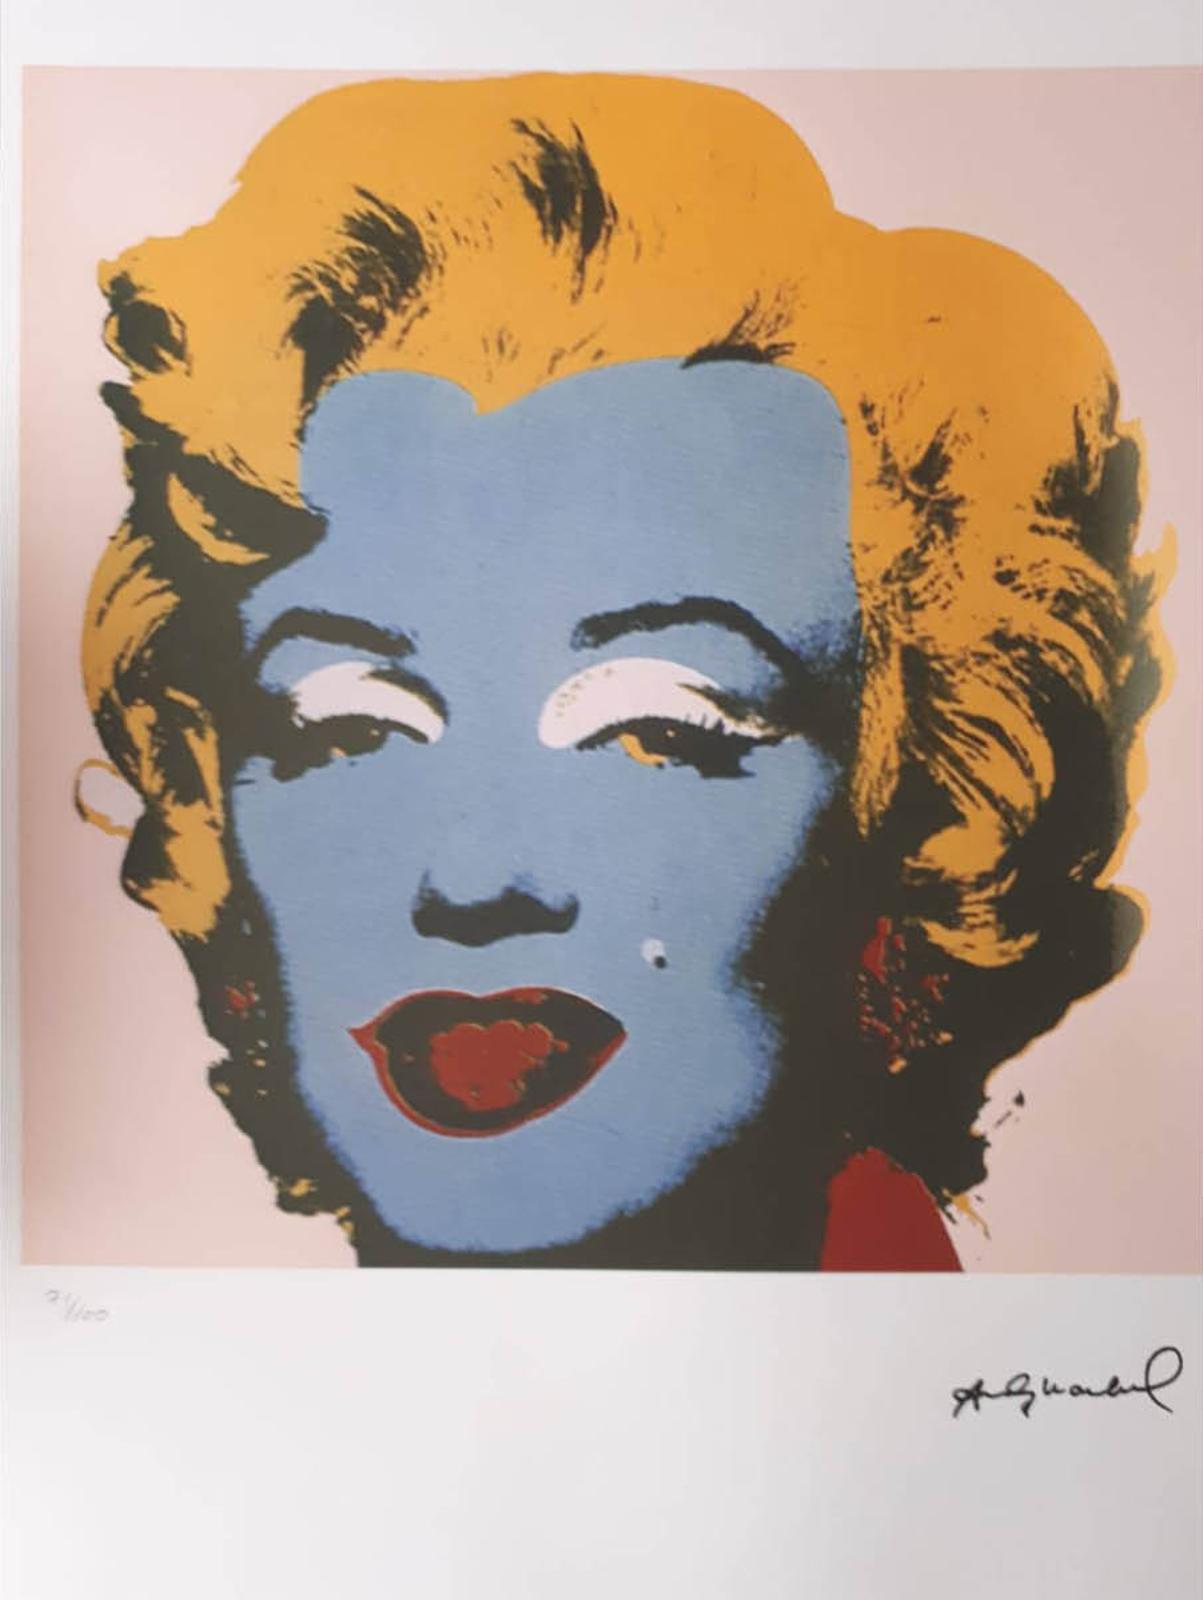 Andy Warhol (1928-1987) - Marilyn Monroe